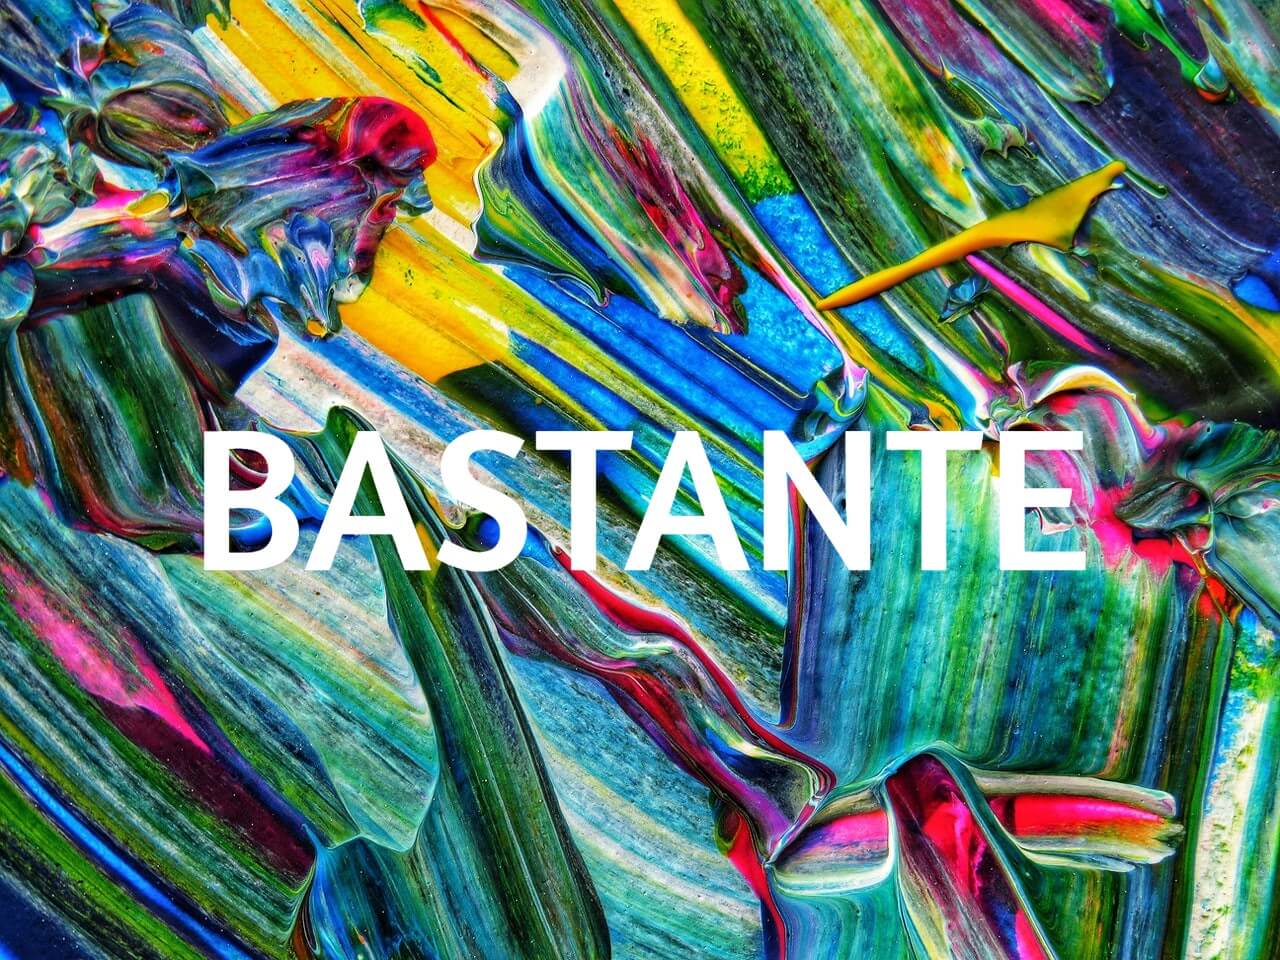 Bastante, how to use it (as mucho, demasiado or poco)